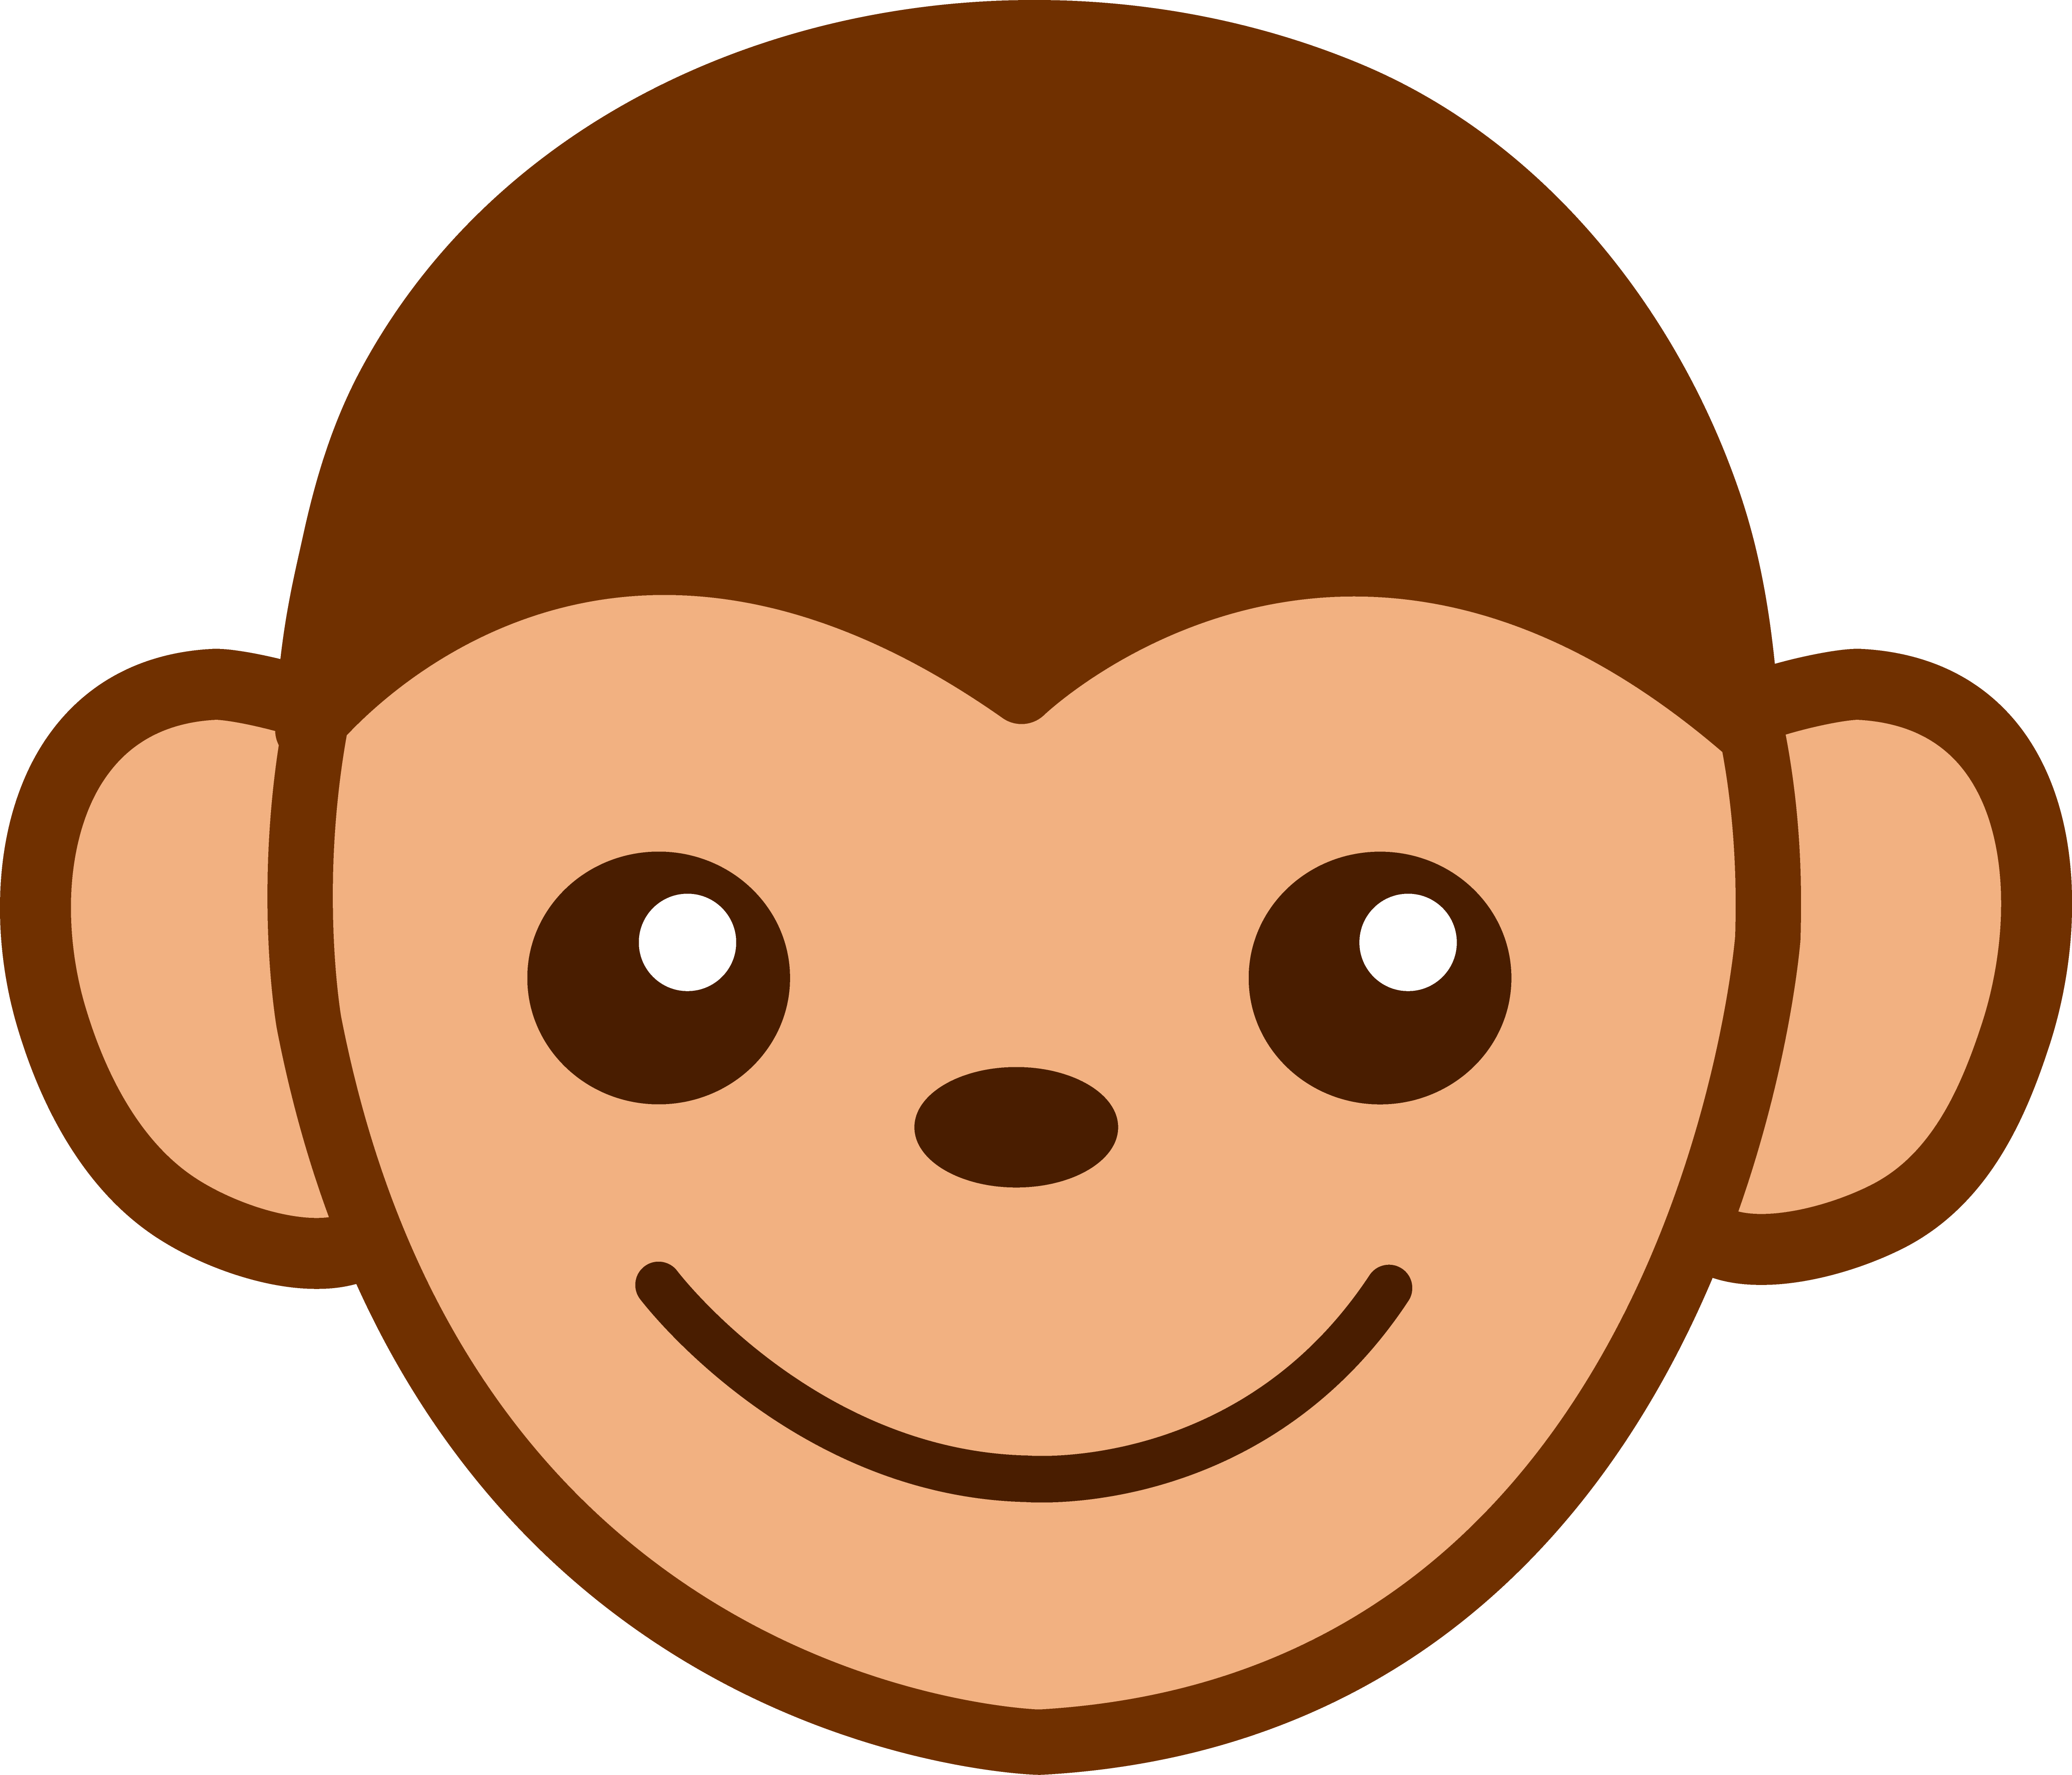 Cute Monkey Cartoon Image 